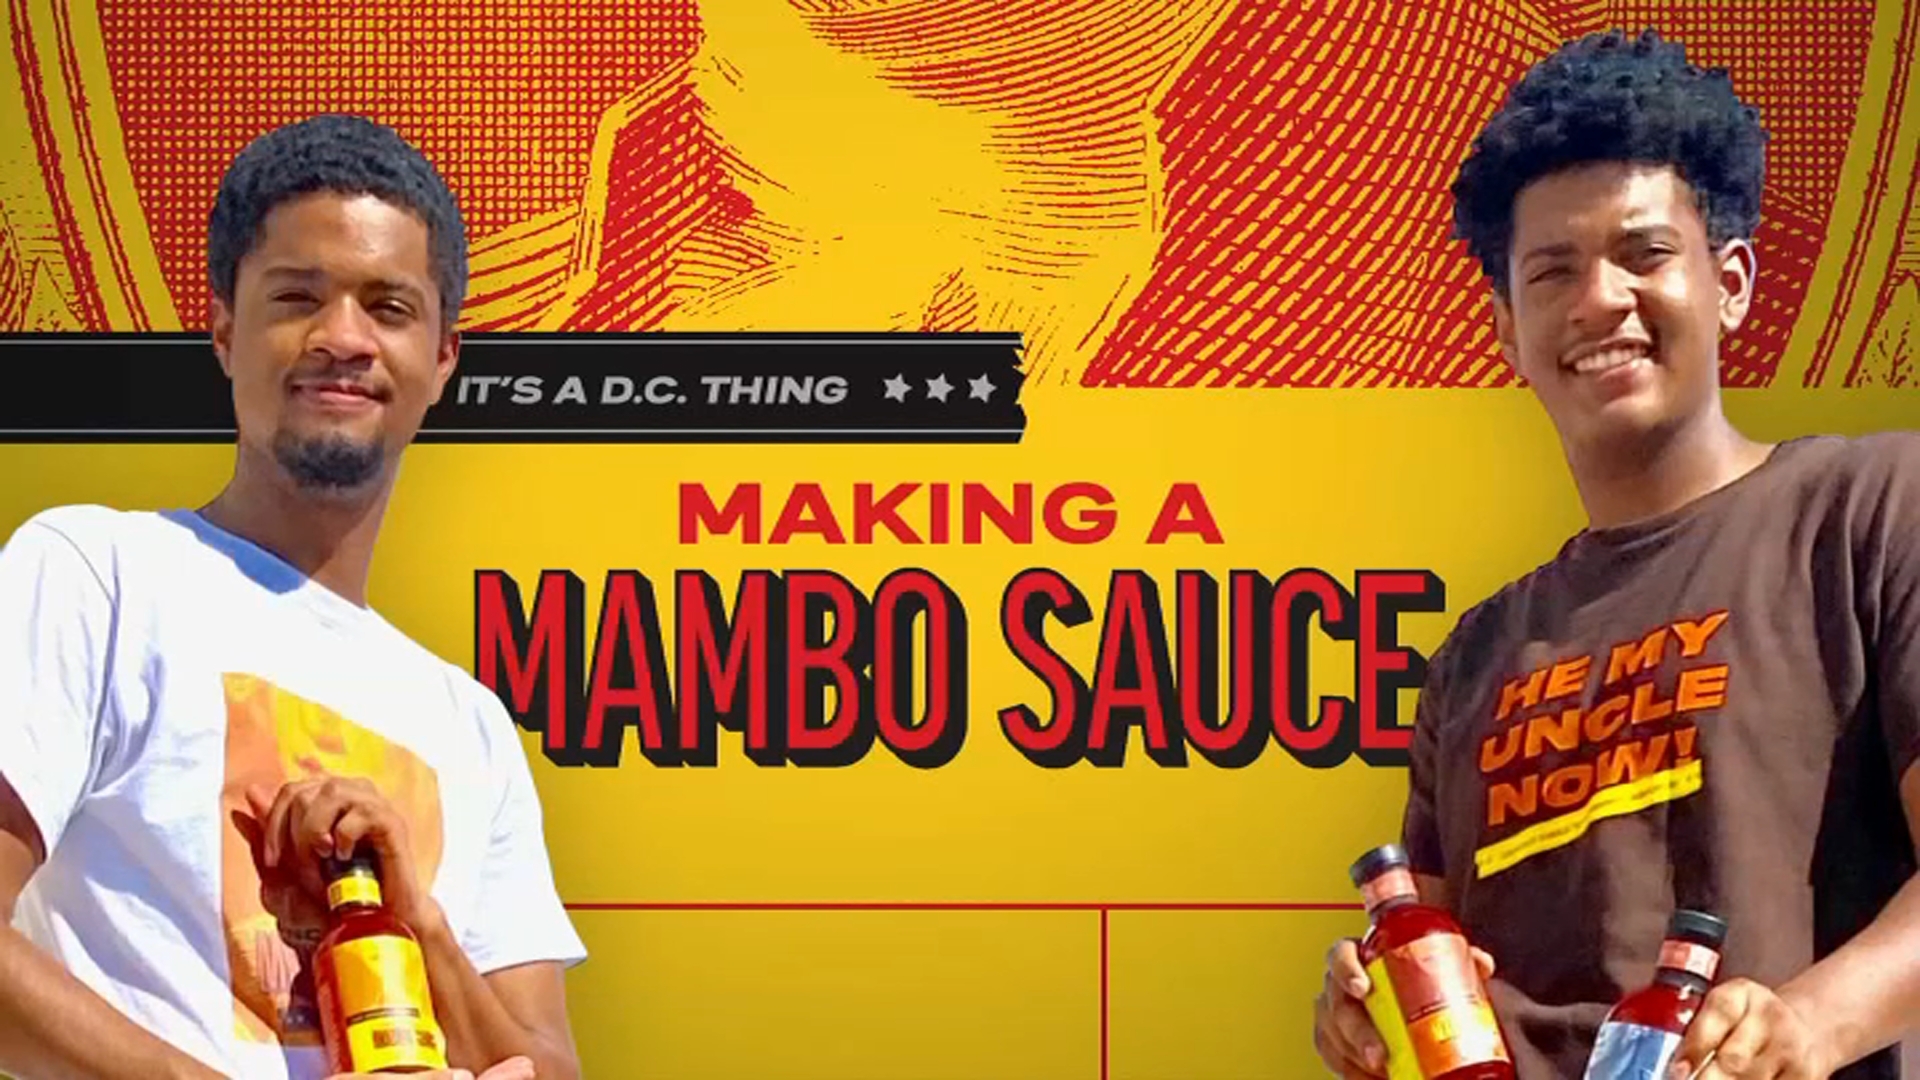 Joy's Mambo Sauce – Joy's Mambo Sauce